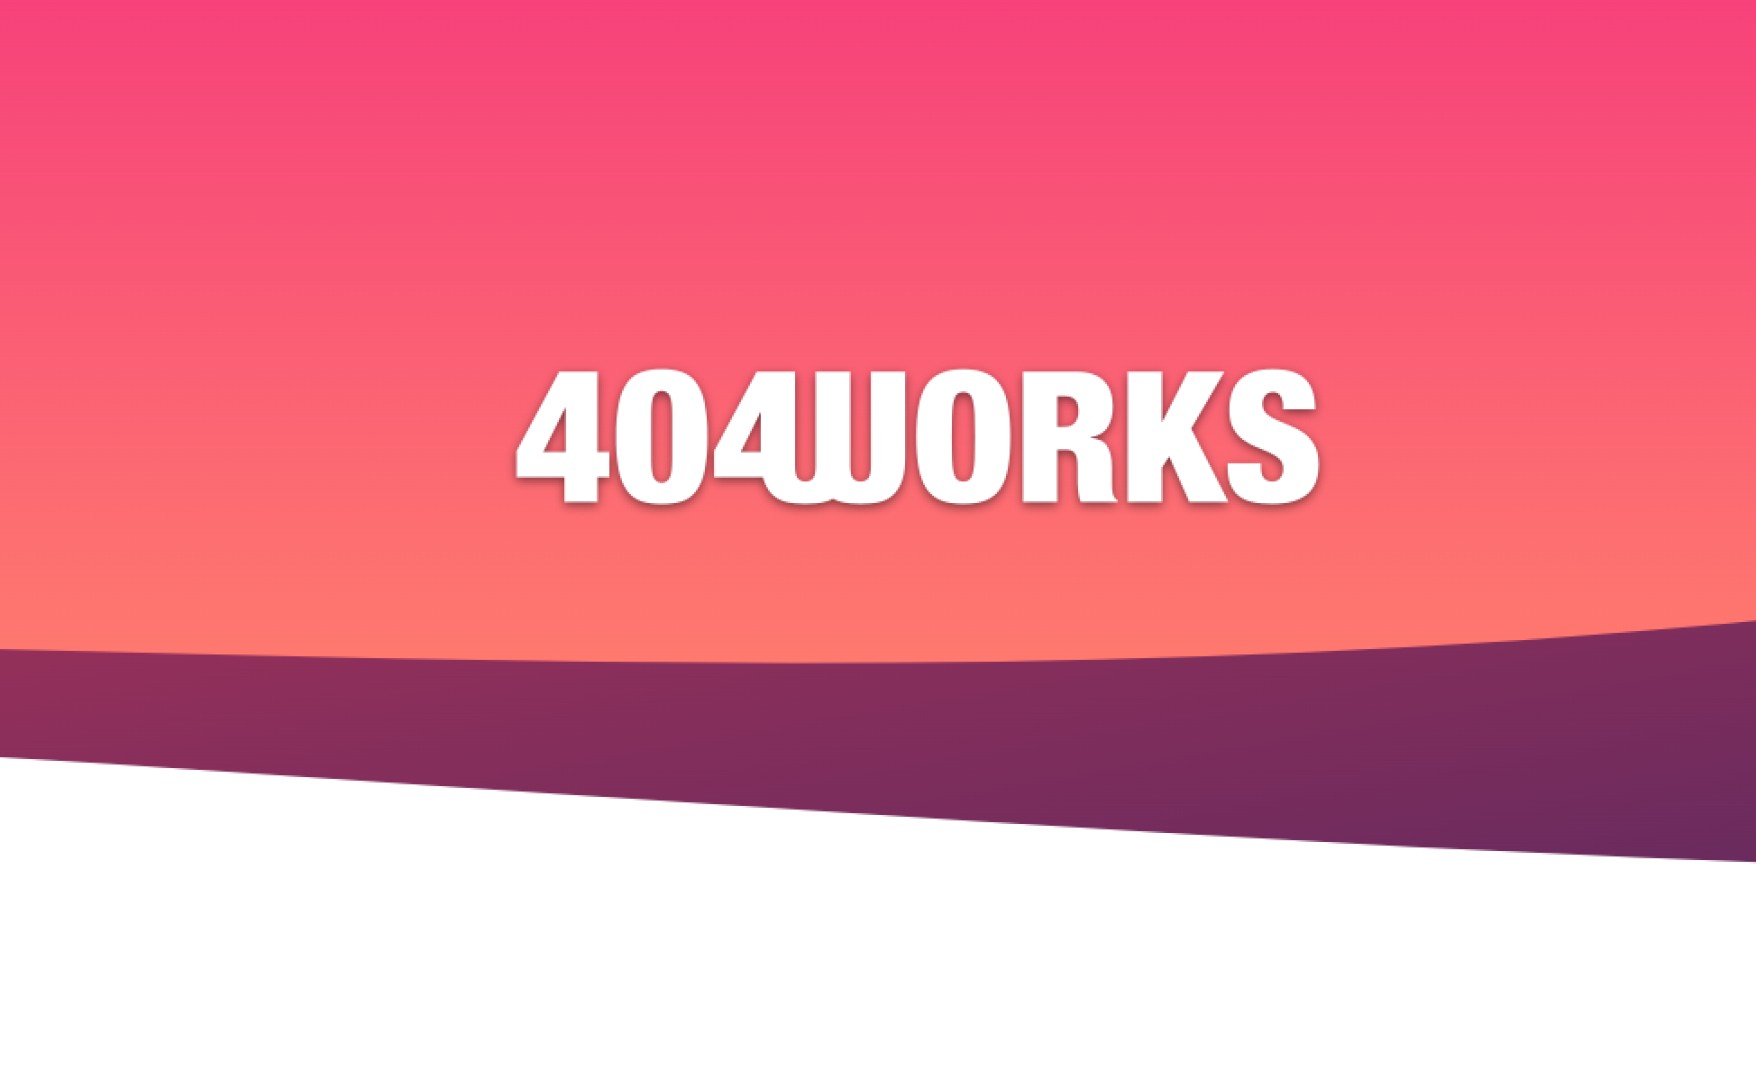 404Works